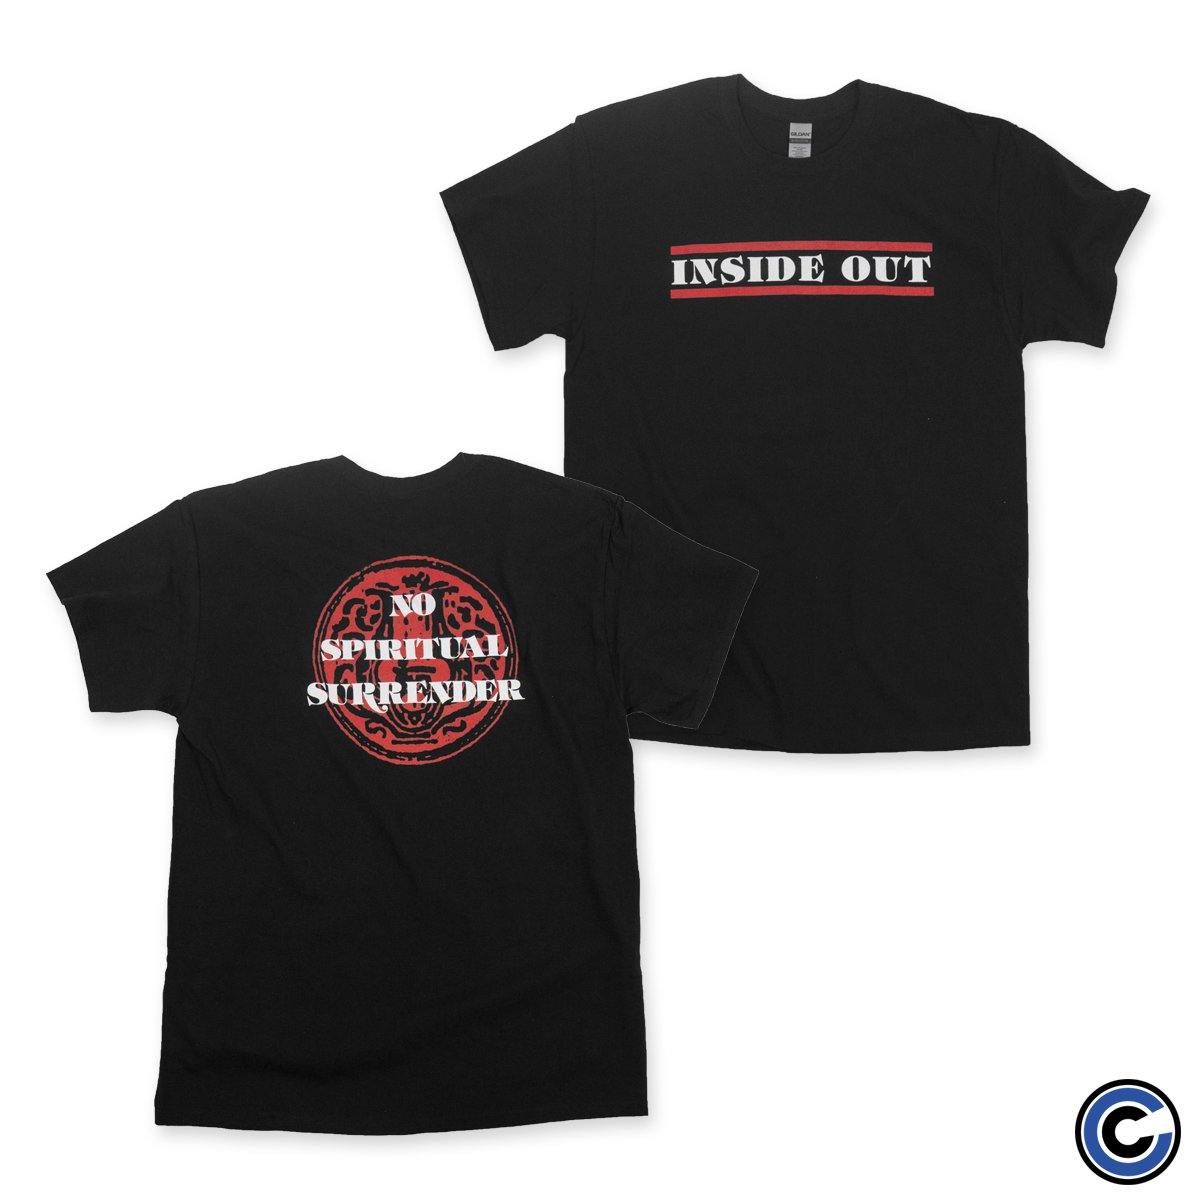 Buy – Inside Out "No Spiritual Surrender" Shirt – Band & Music Merch – Cold Cuts Merch